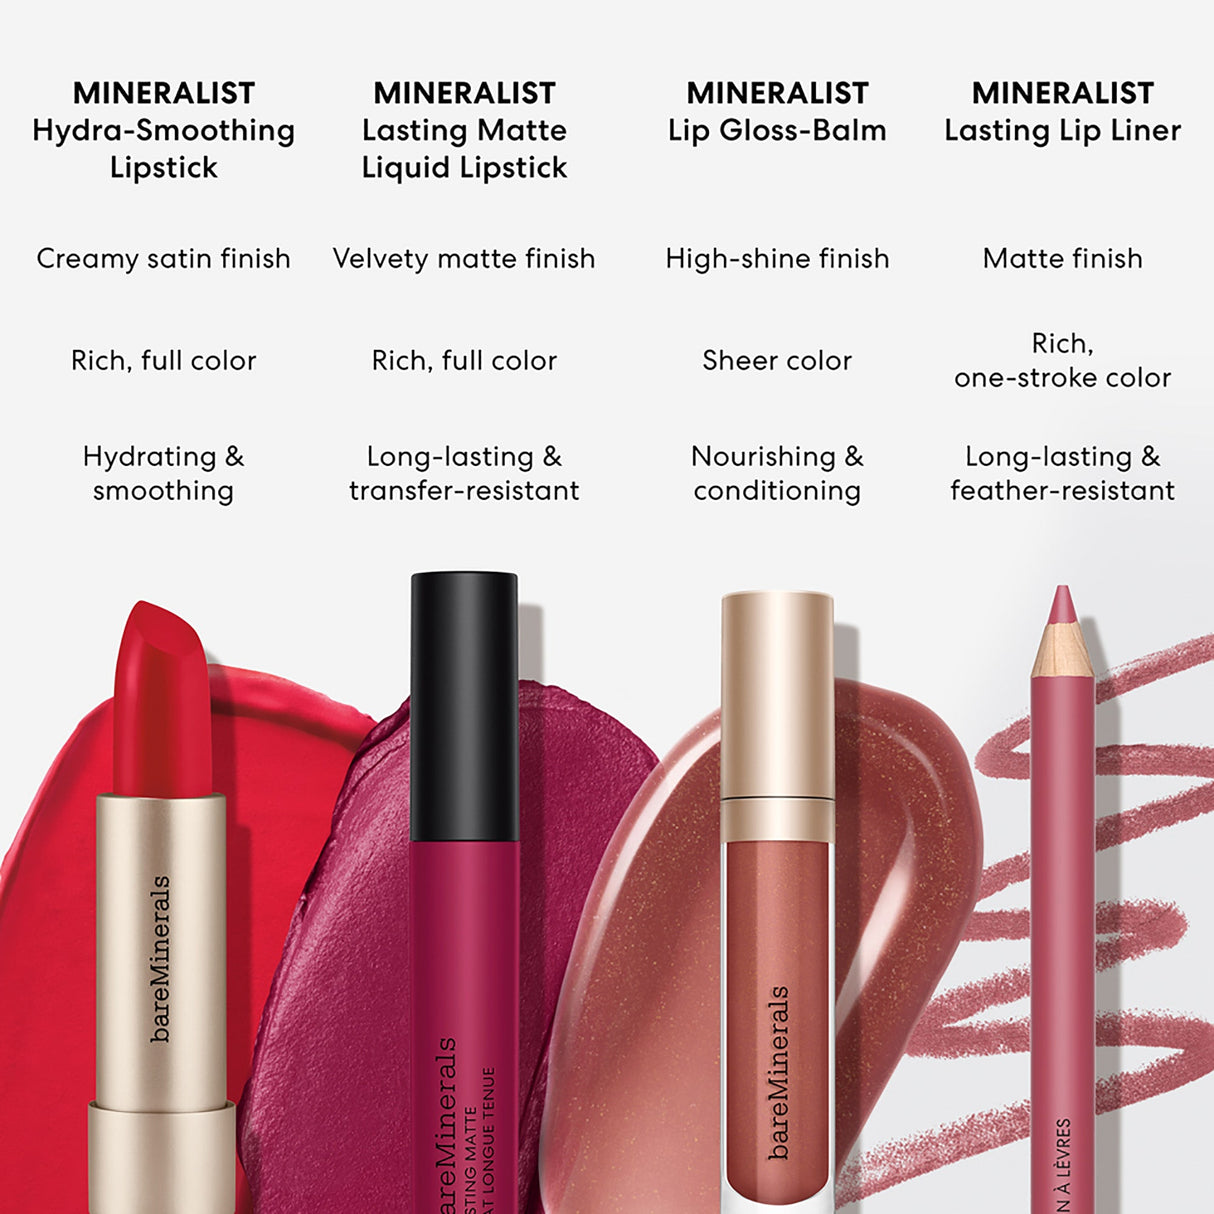 MINERALIST Lasting Matte Liquid Lipstick-bareMinerals